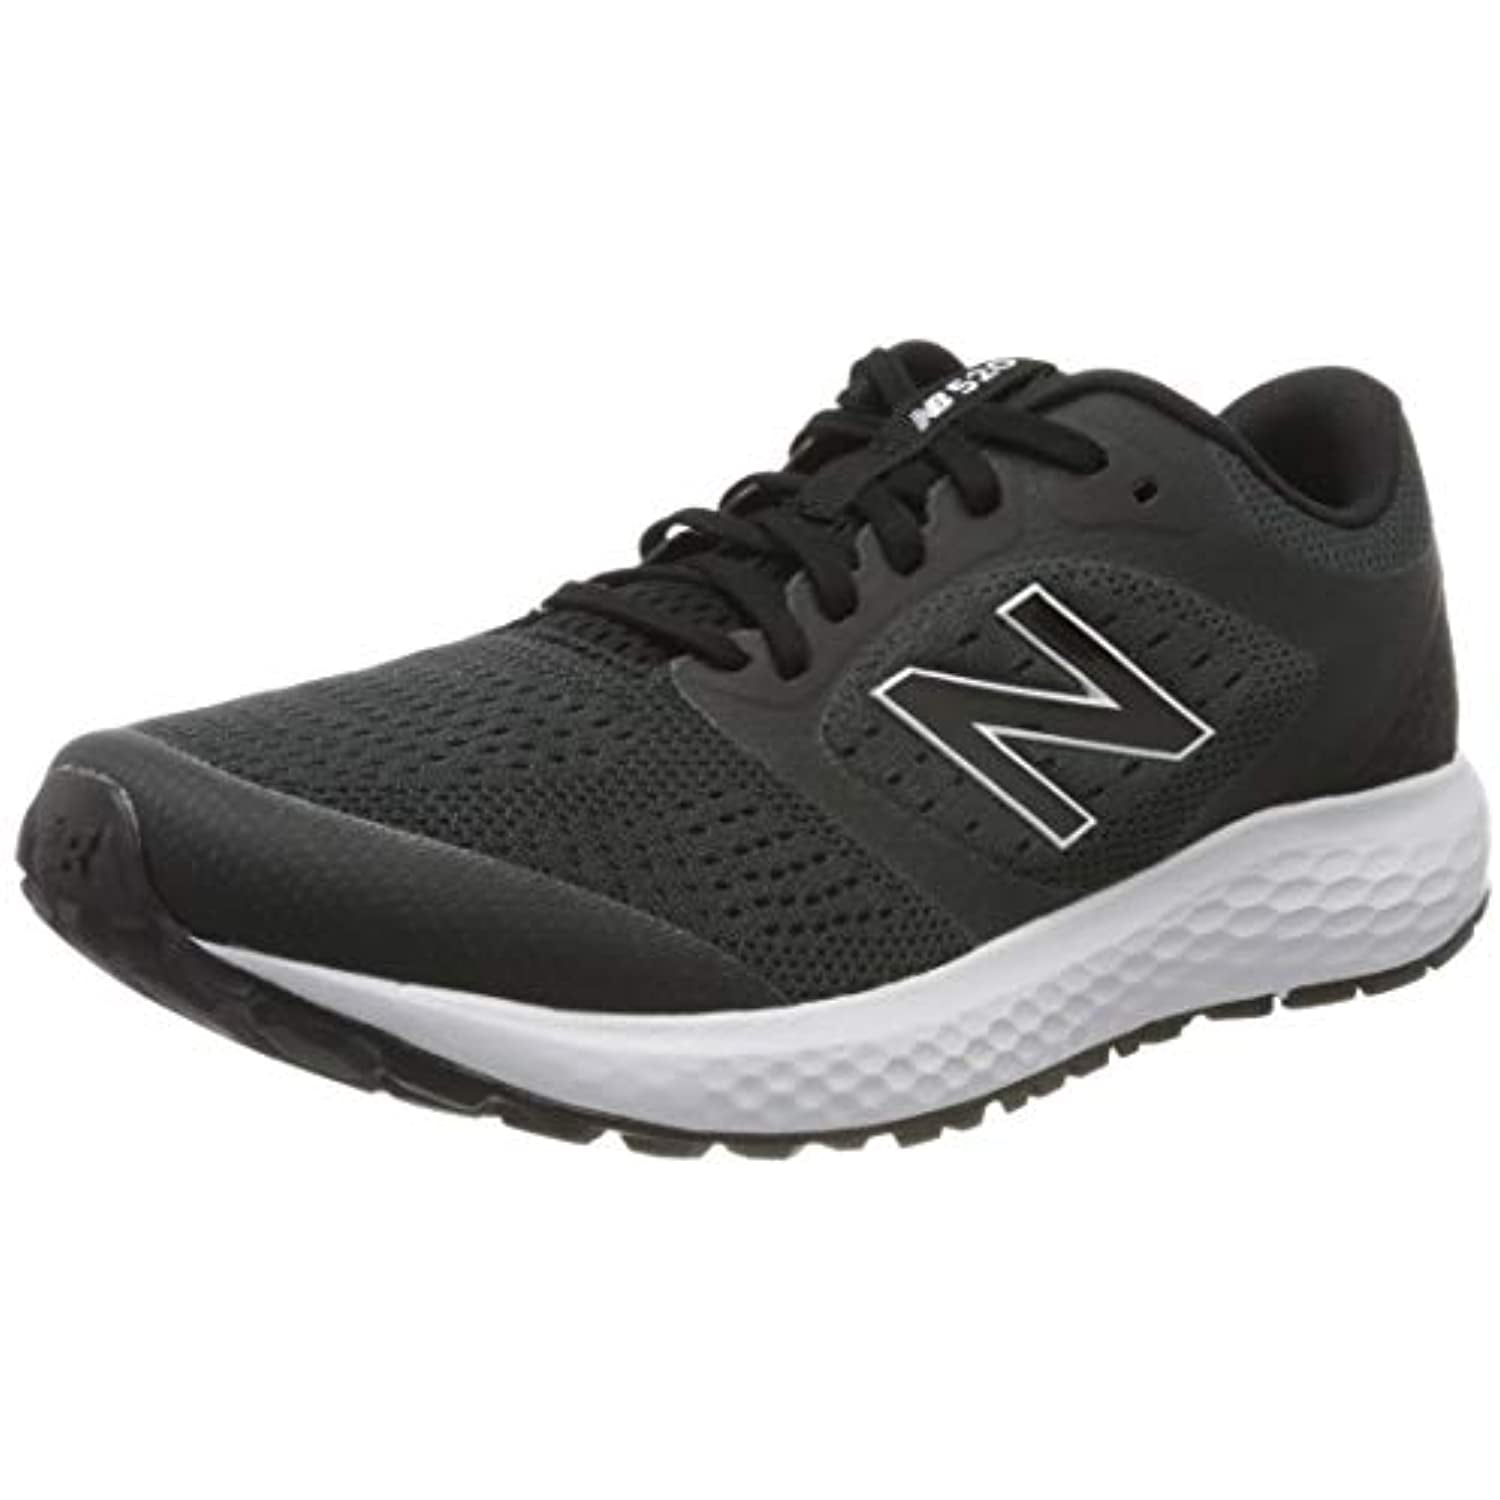 New Balance mens 520 V6 Running Shoe, Black/Orca, Size 10.5 M US